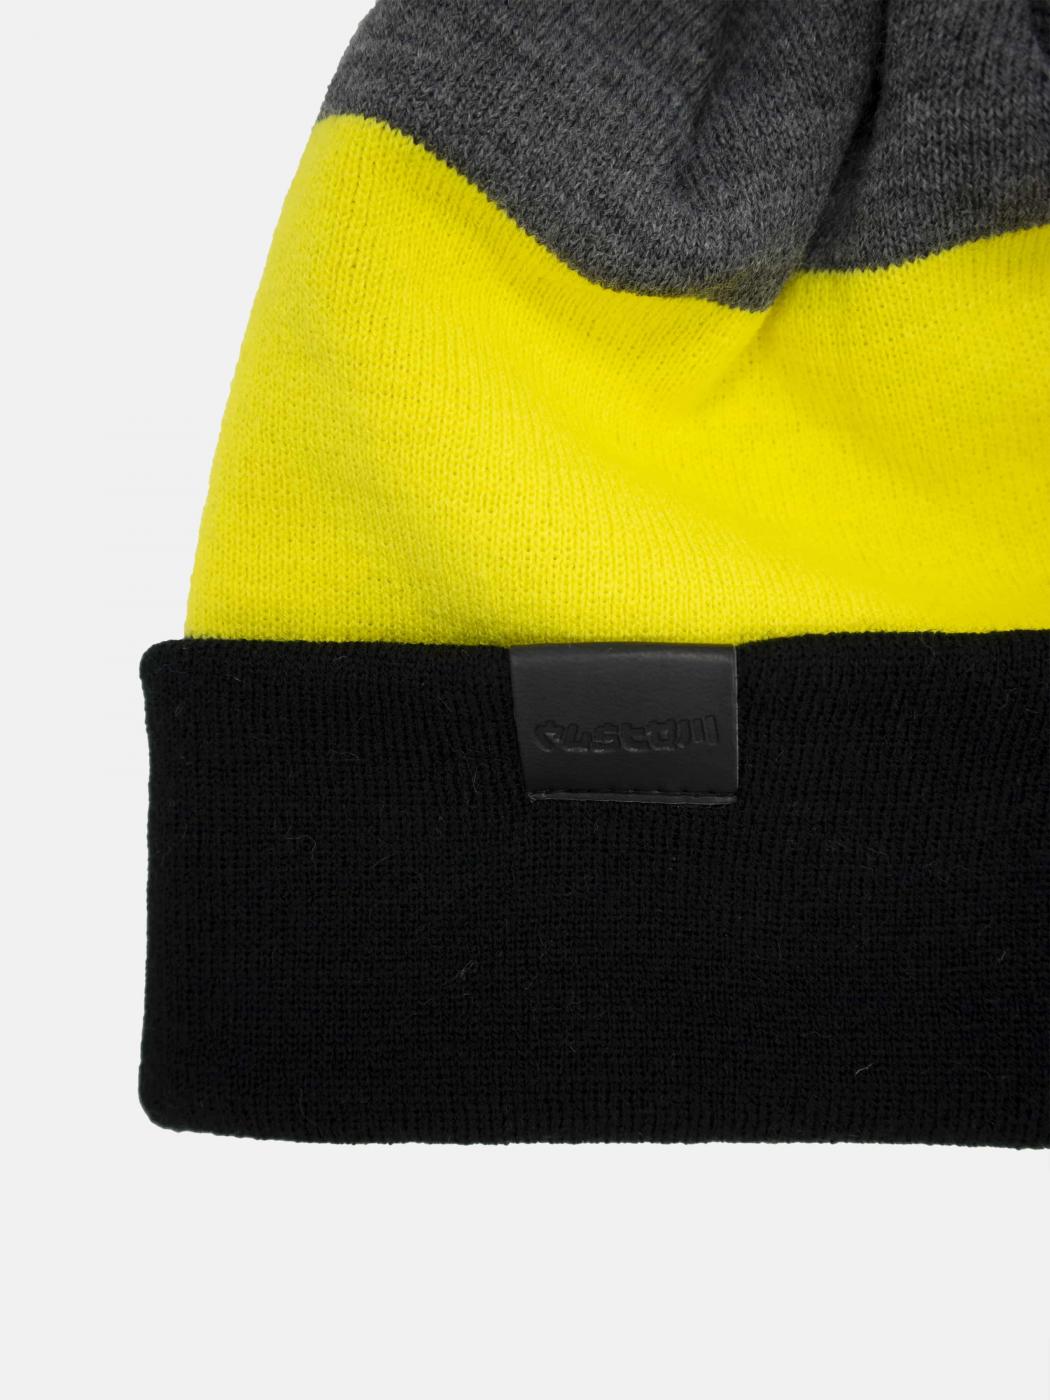 Шапка Custom Wear Tricolor з бумбоном графіт з жовтим, чорним  - Фото 5